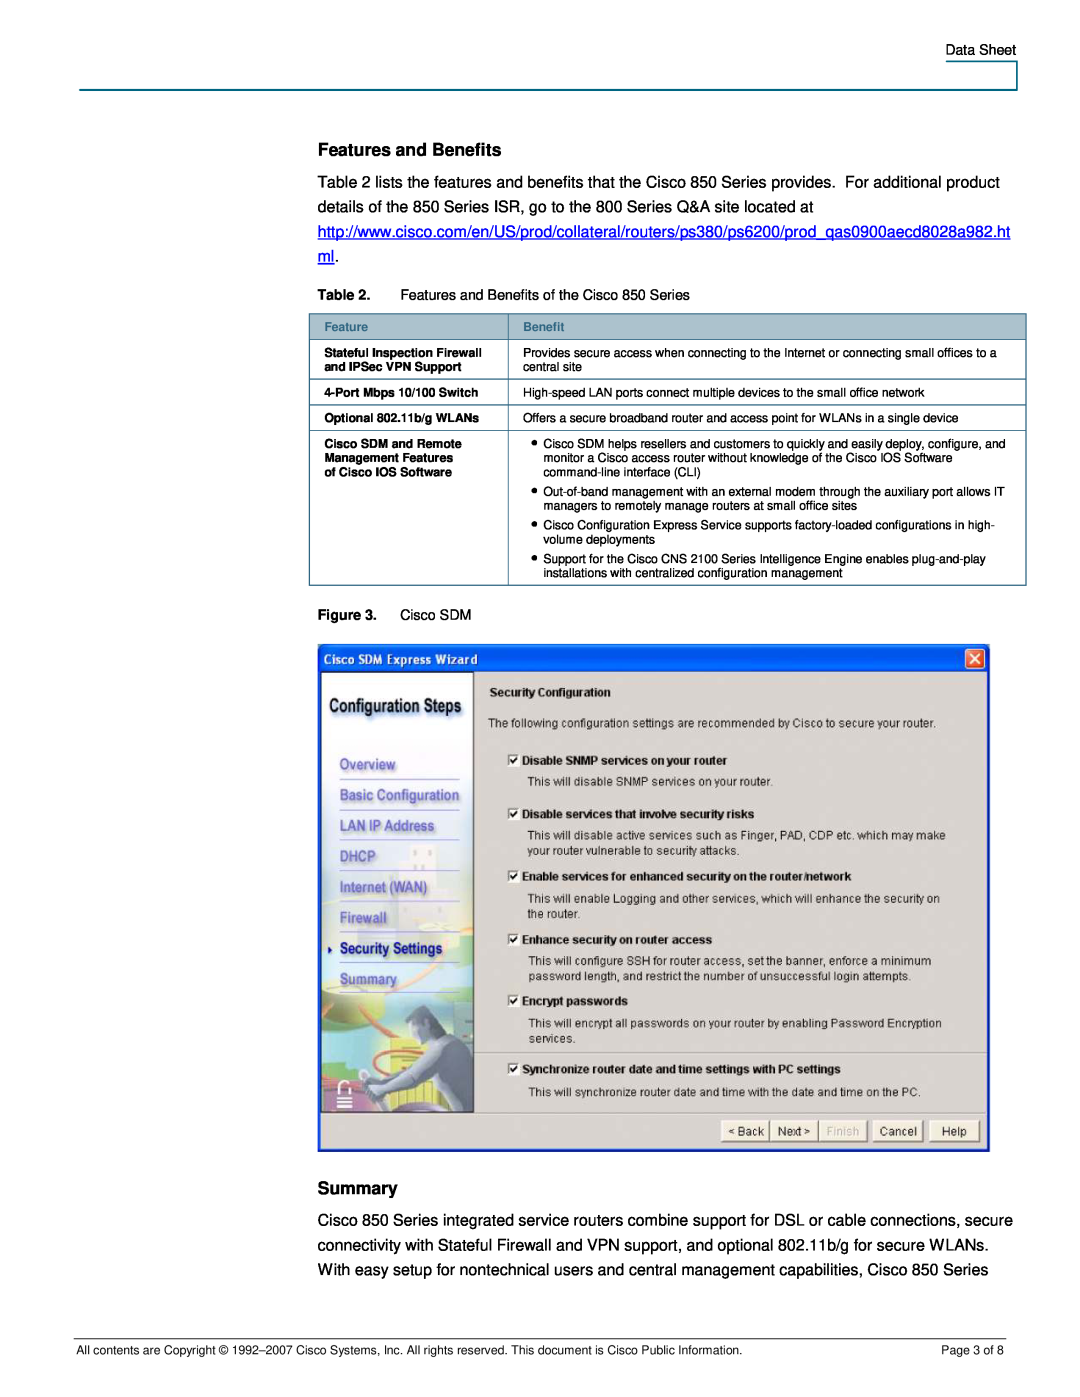 Cisco Systems CISCO851WGEK9RF manual Summary, Data Sheet, Features and Benefits of the Cisco 850 Series, Cisco SDM 